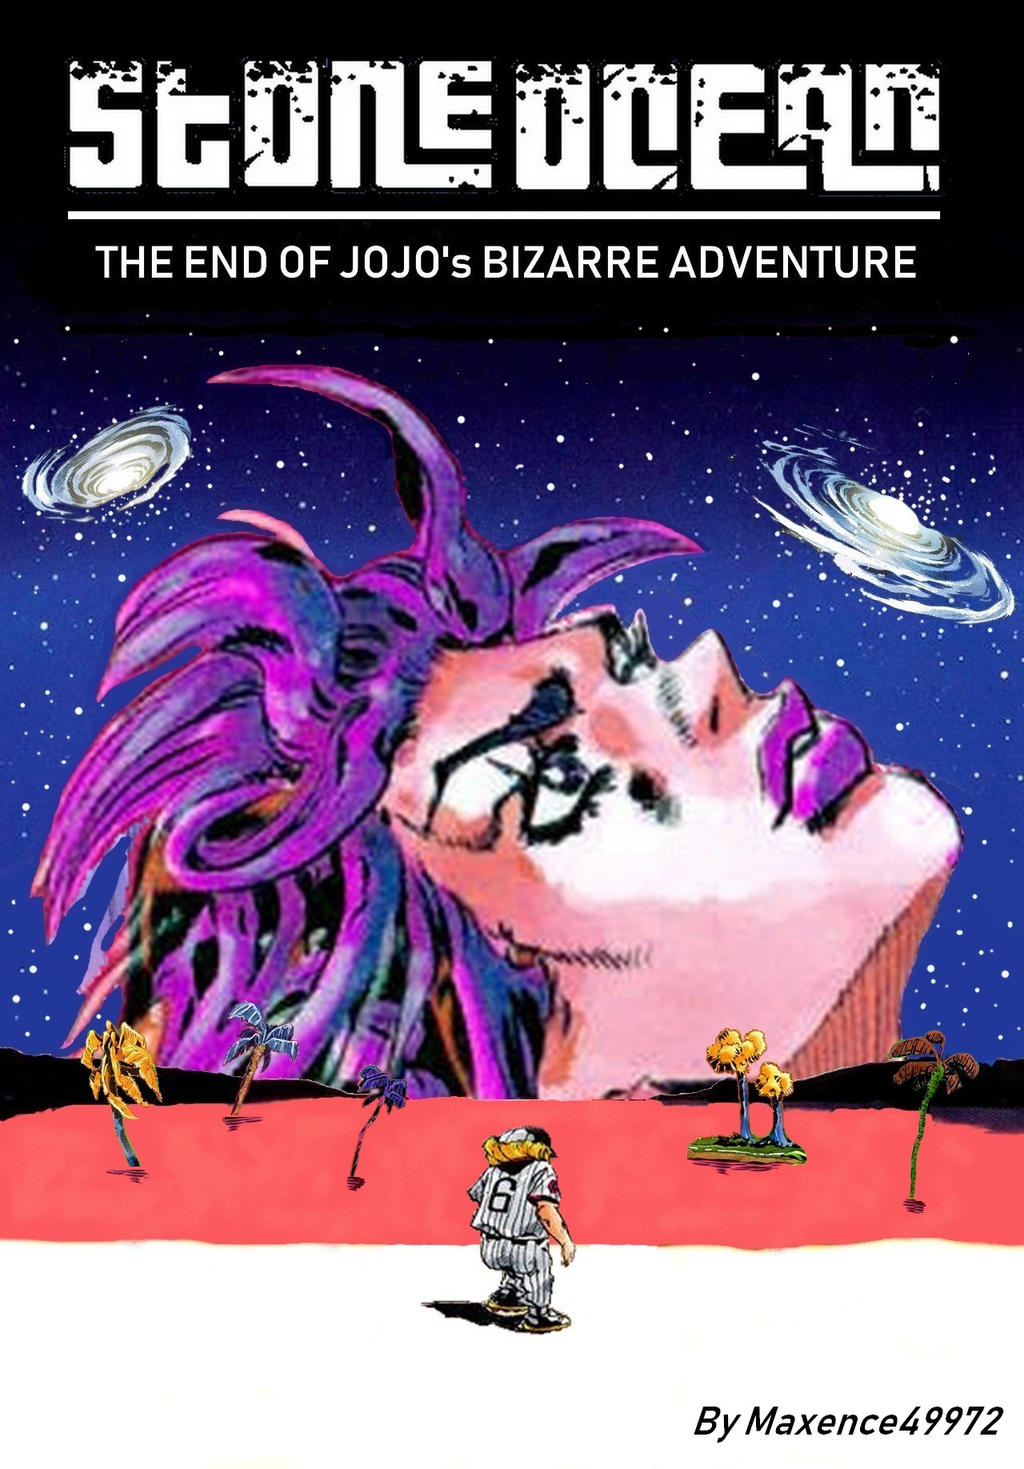 Jojos Bizarre Adventure - Stone Ocean The End by Pokenaito on DeviantArt